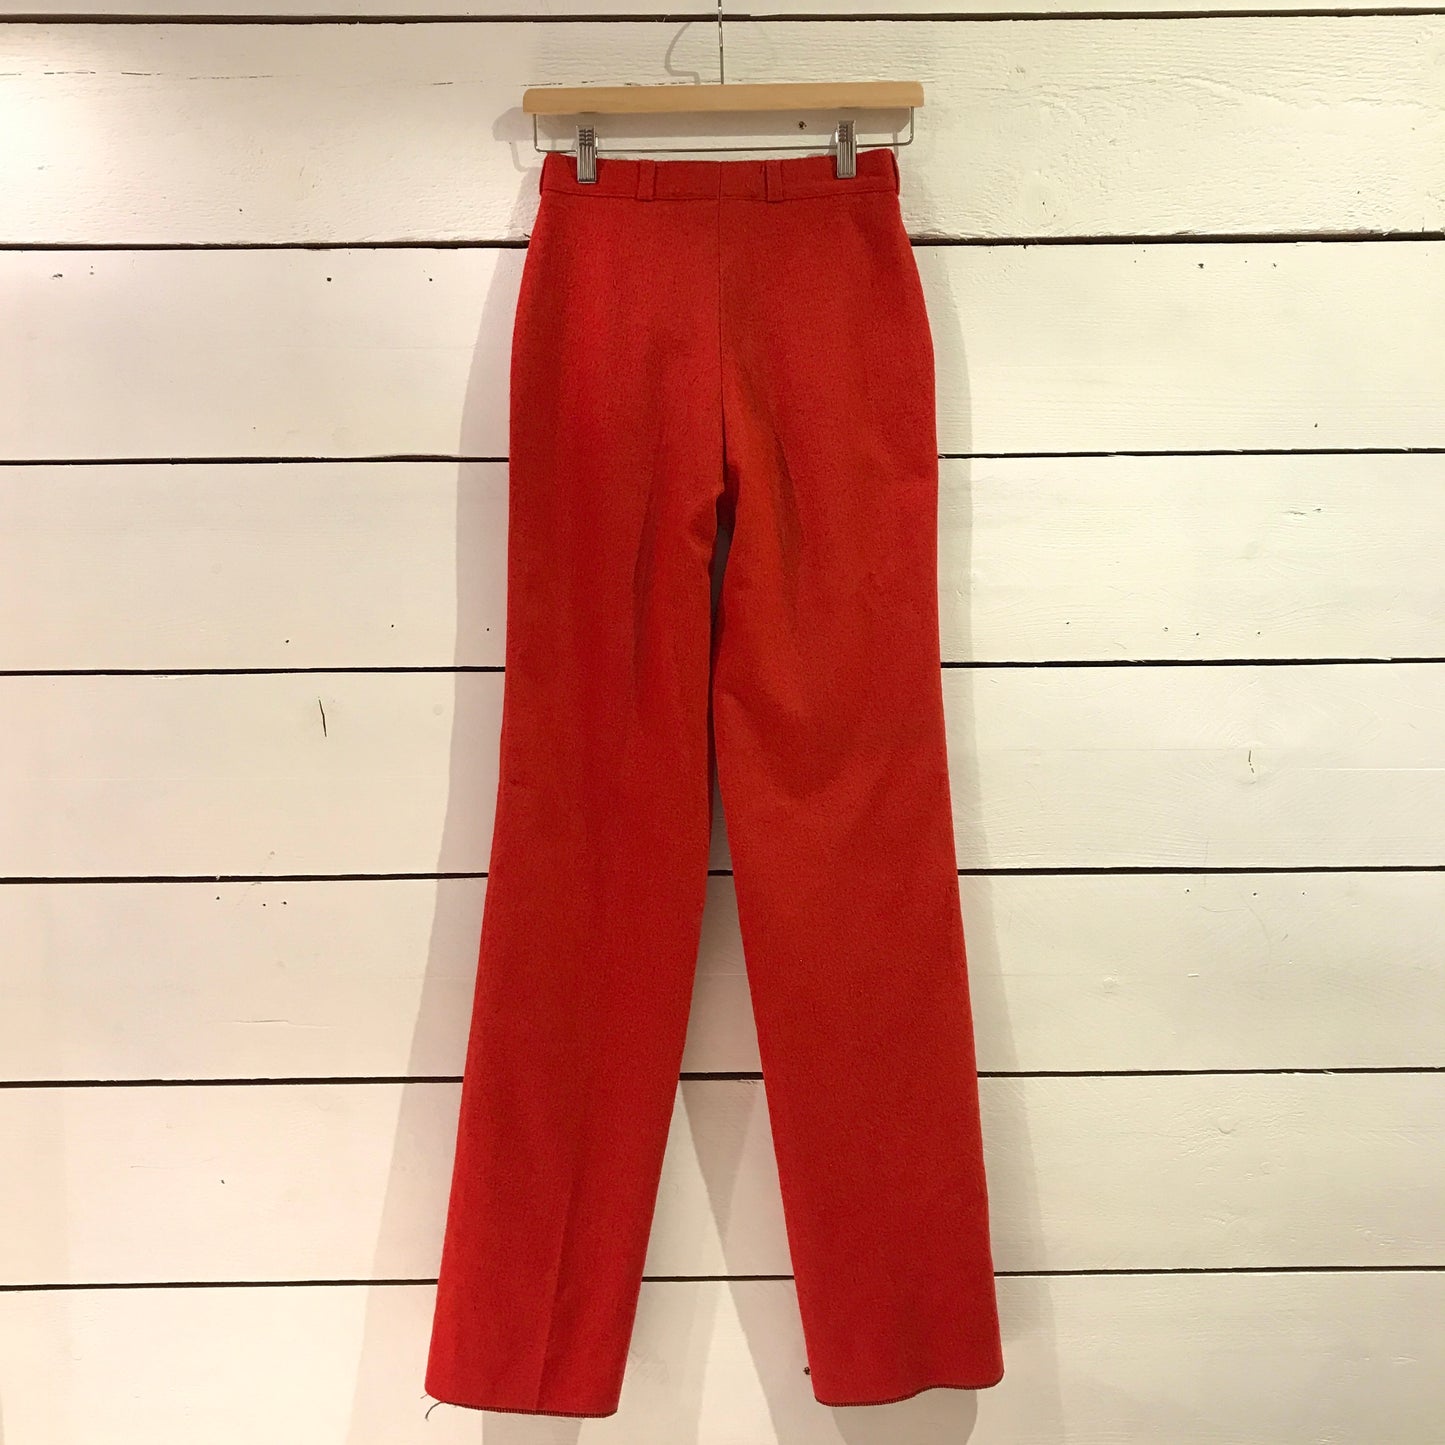 Pantalon rouge deadstock 70s